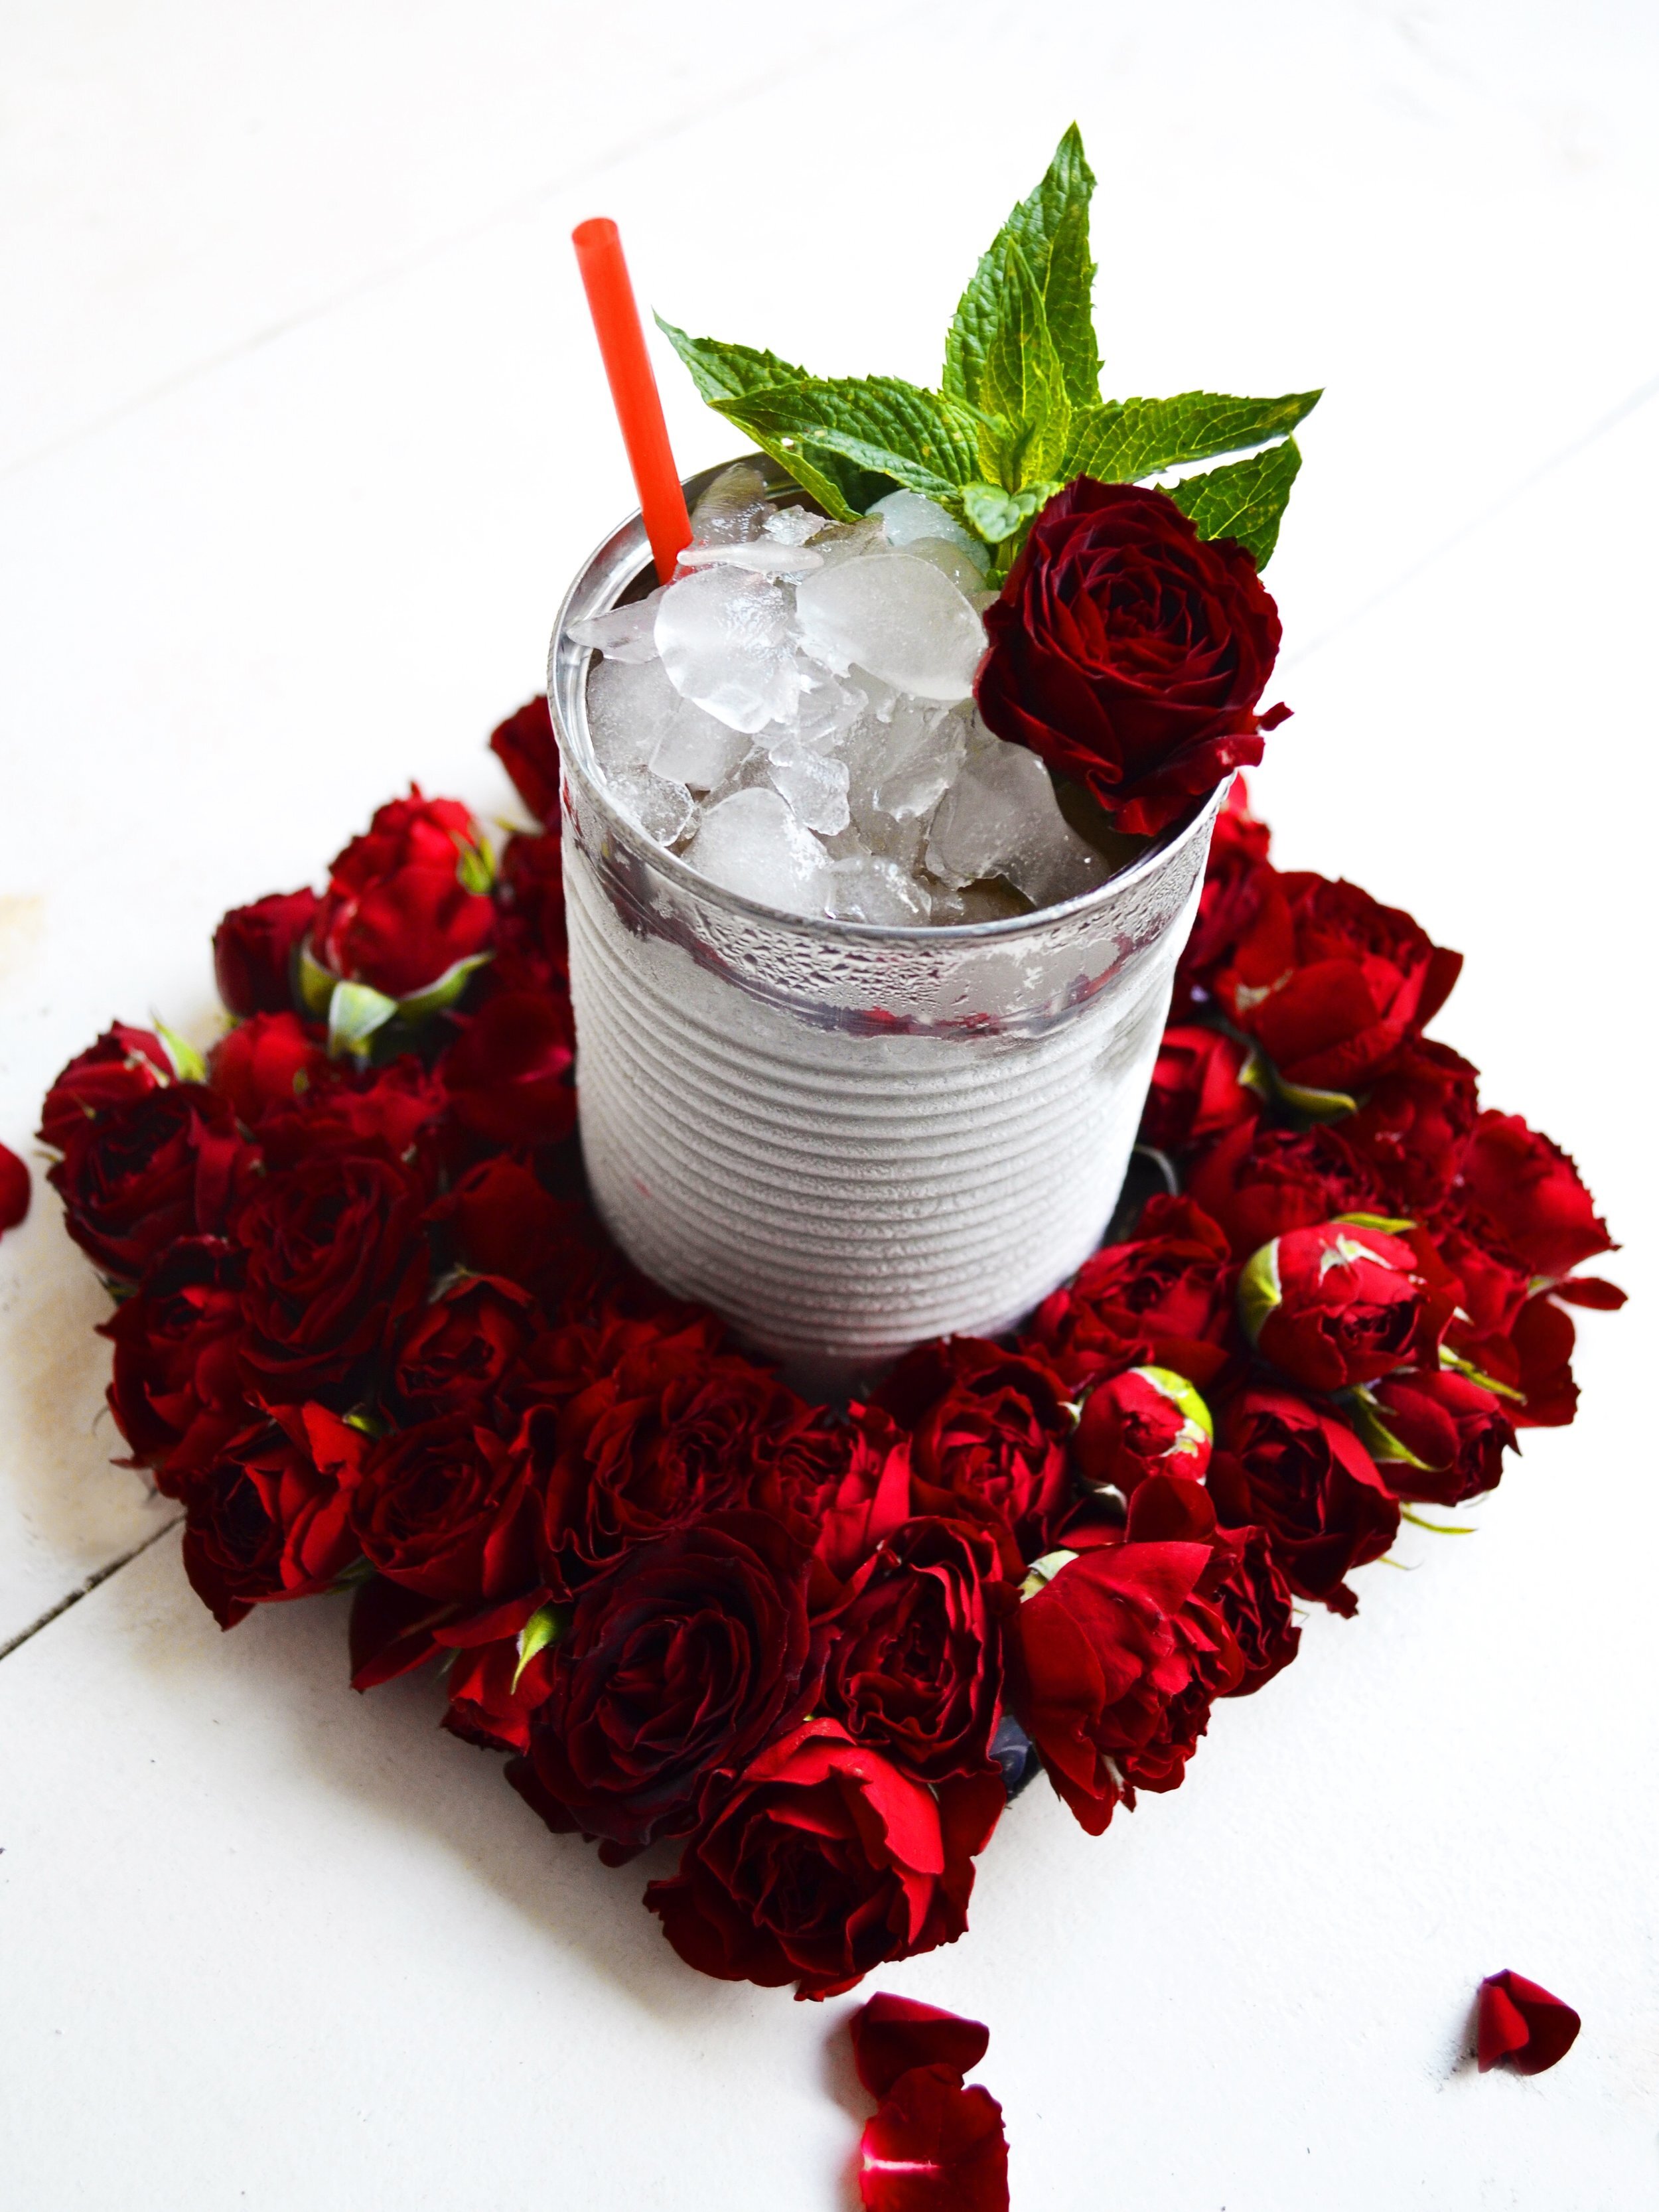 Cocktail Garnishes & Drink Accessories, Rose Petals